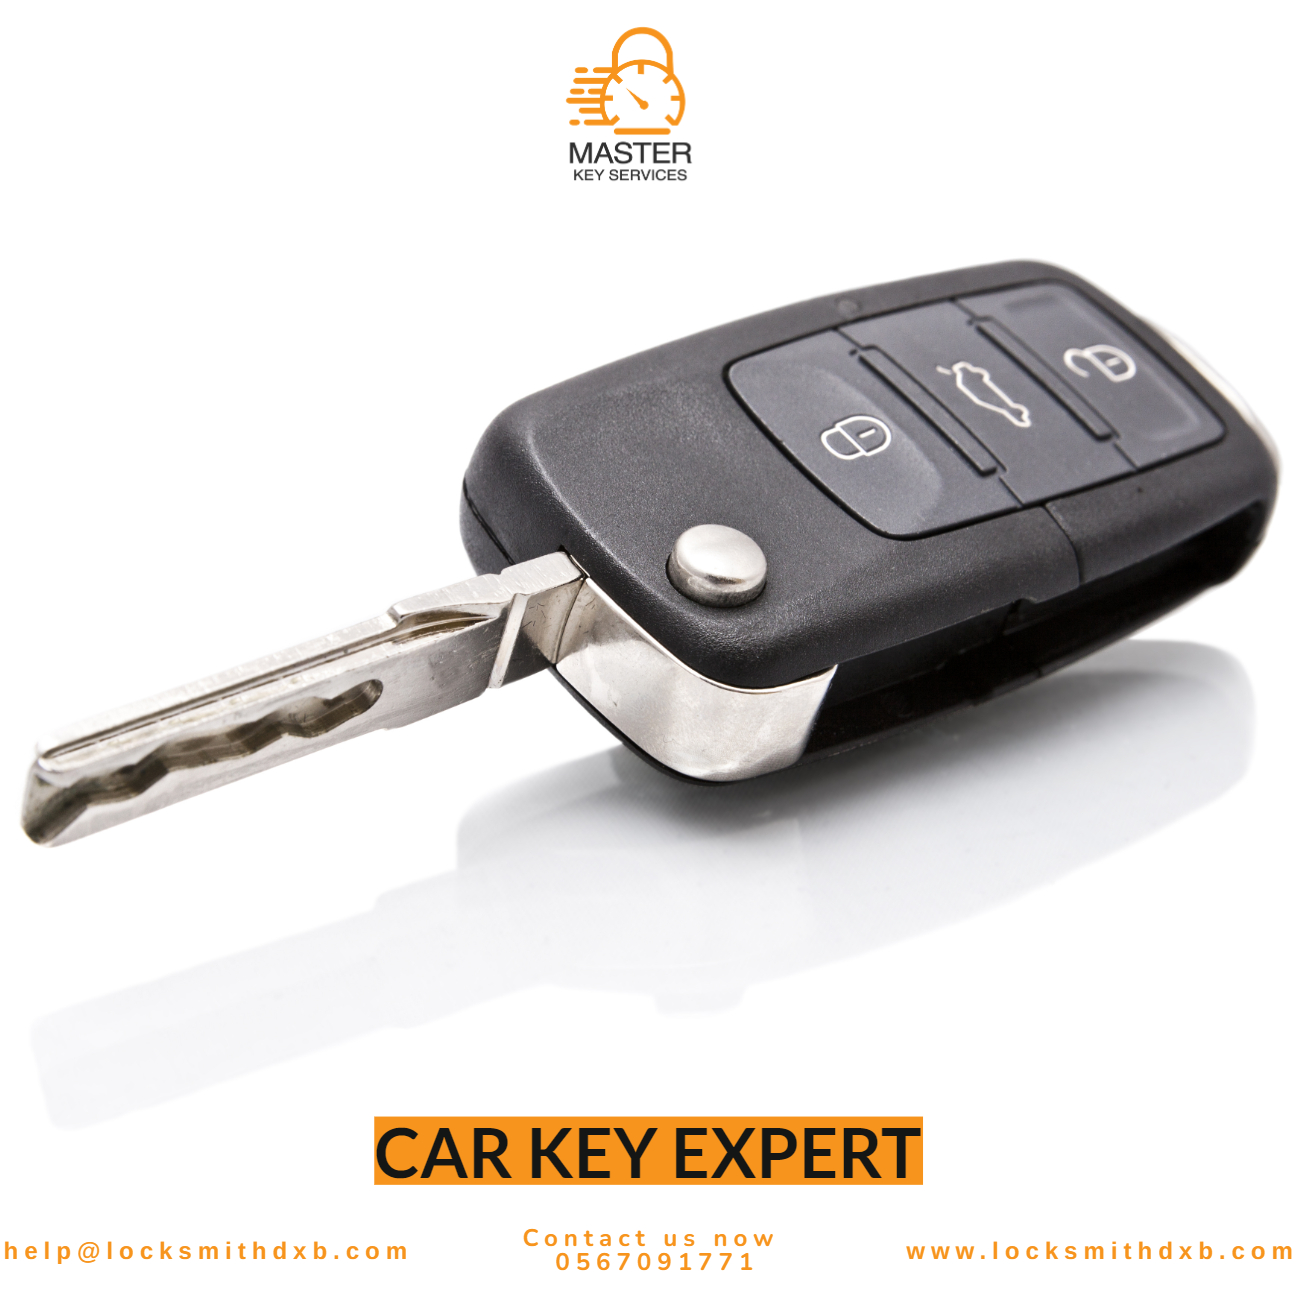 Car key expert